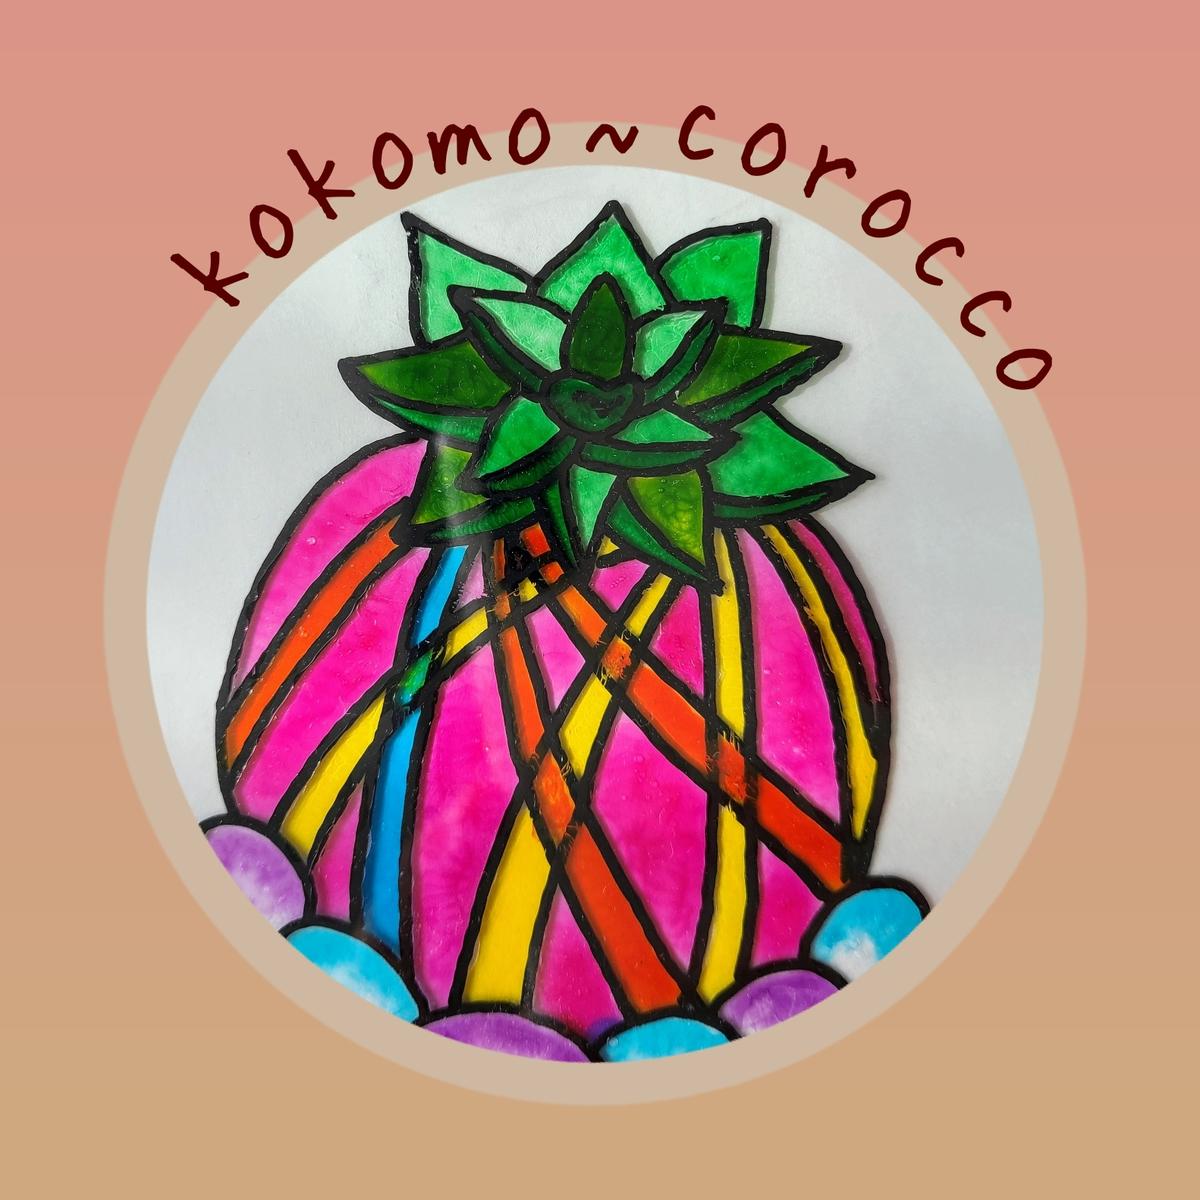 kokomo-coroccoの画像